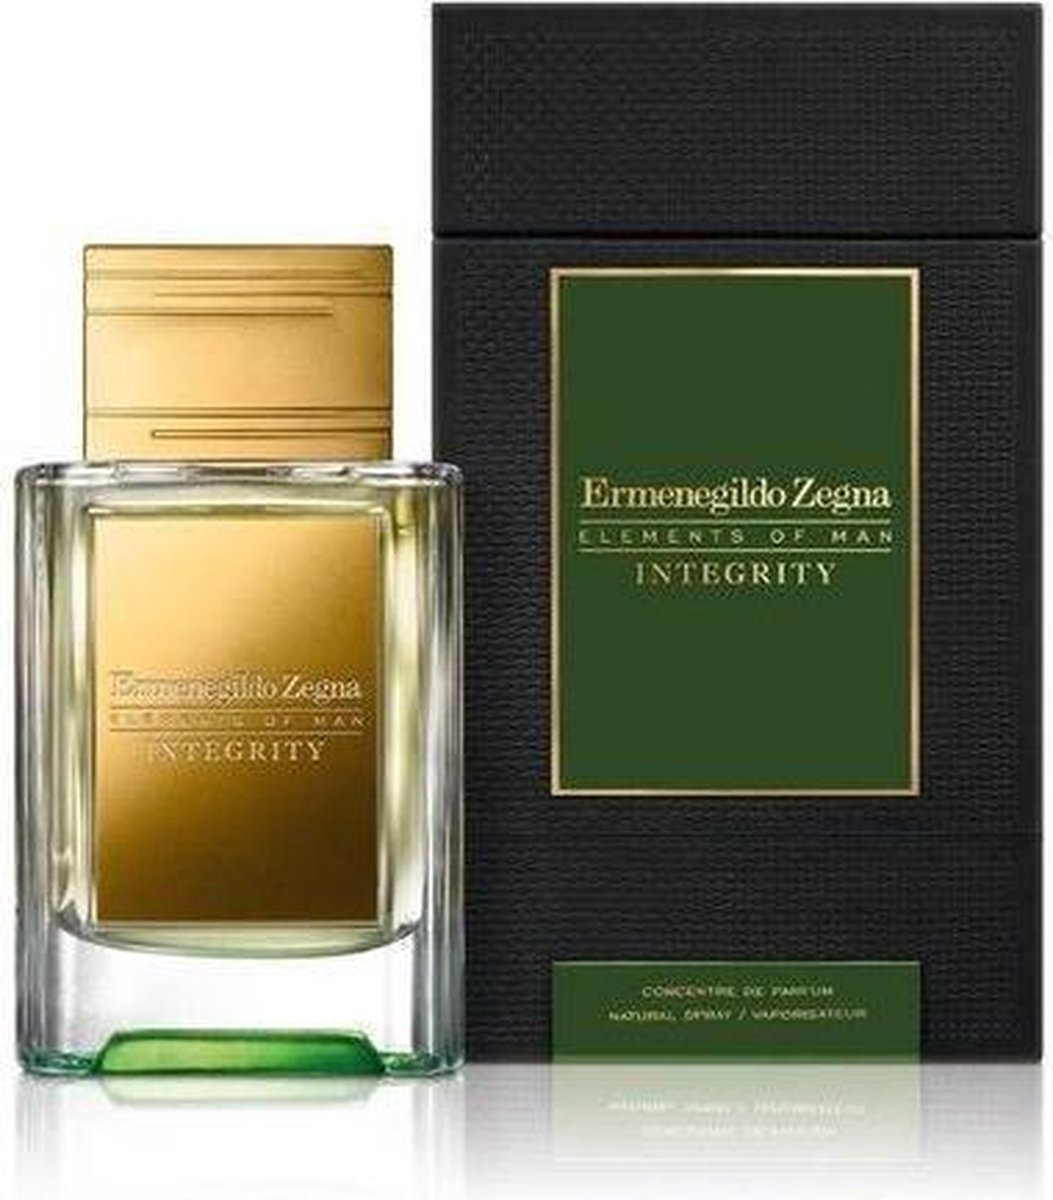 Ermenegildo Zegna Elements of Man Integrity Concentre De Parfum 50 ml